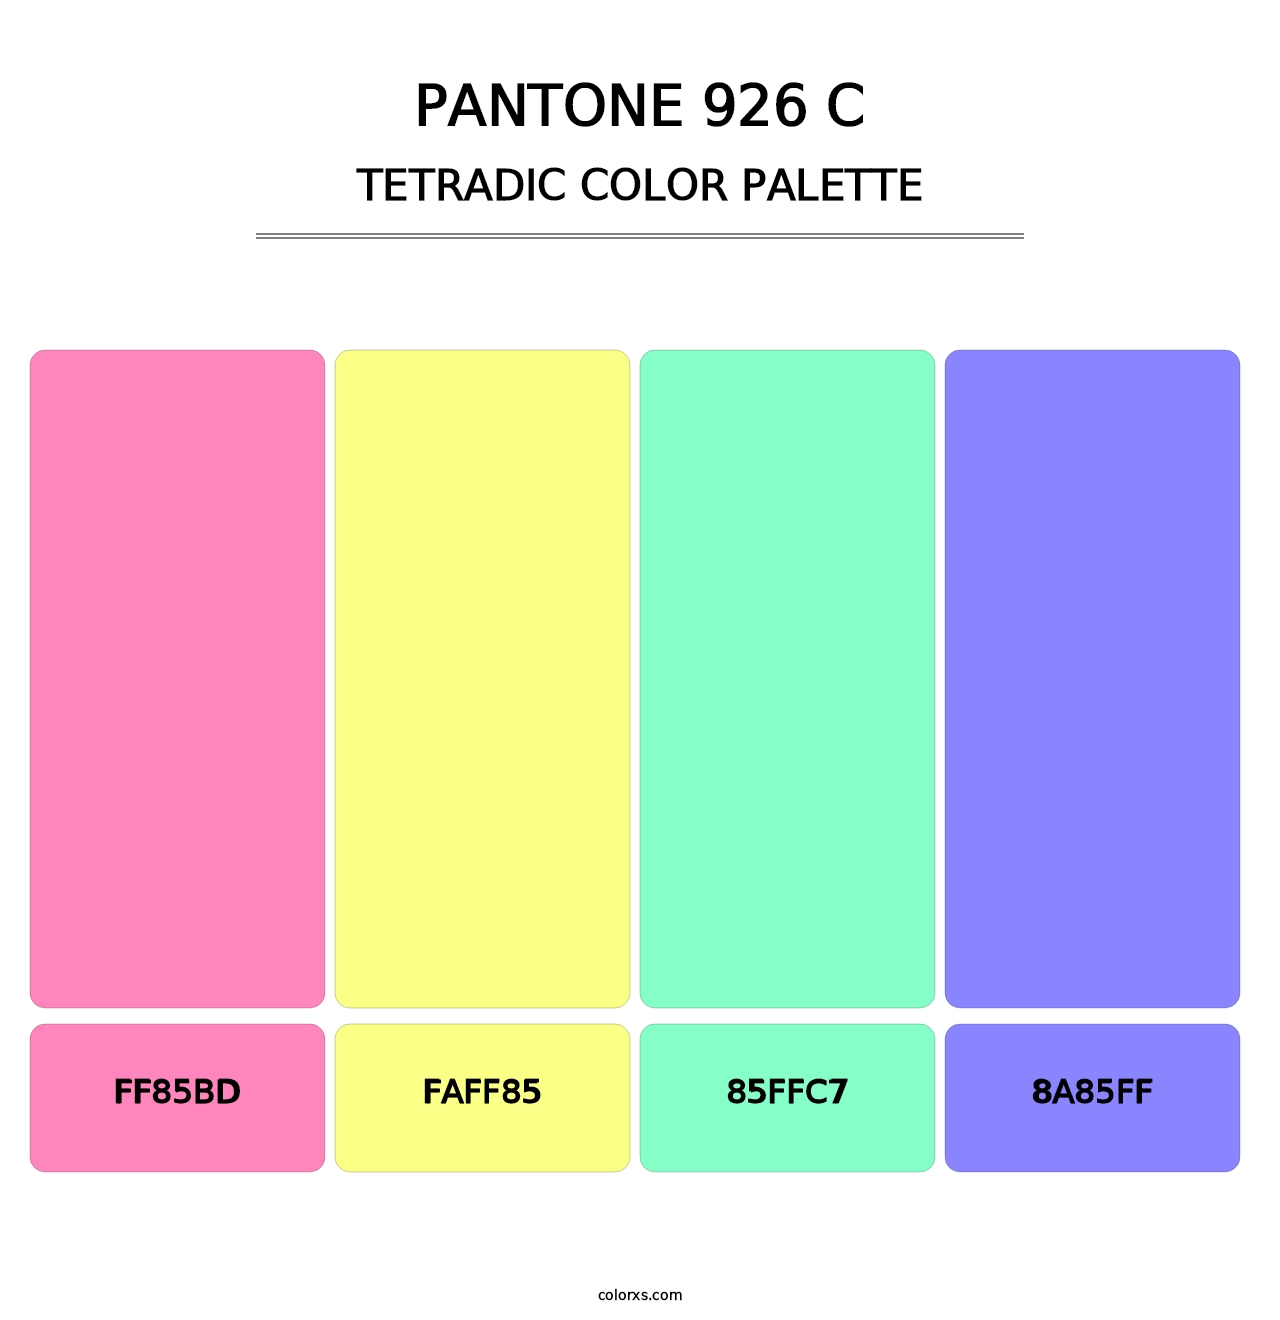 PANTONE 926 C - Tetradic Color Palette